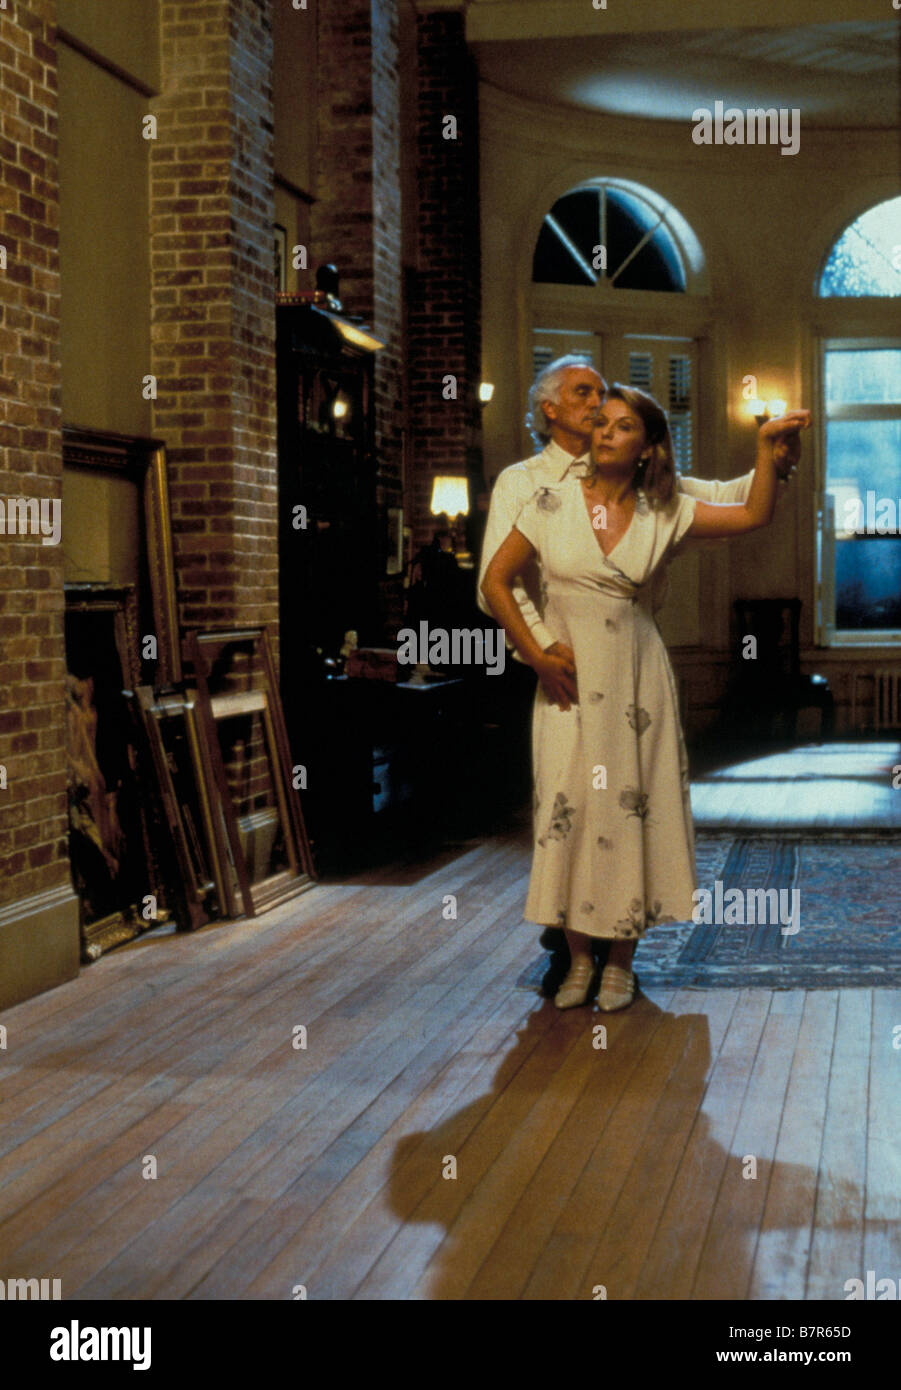 Au dela du desir Bliss / AU-DELA DU DESIR  Year: 1997 USA Terence Stamp, Sheryl Lee  Director: Lance Young Stock Photo